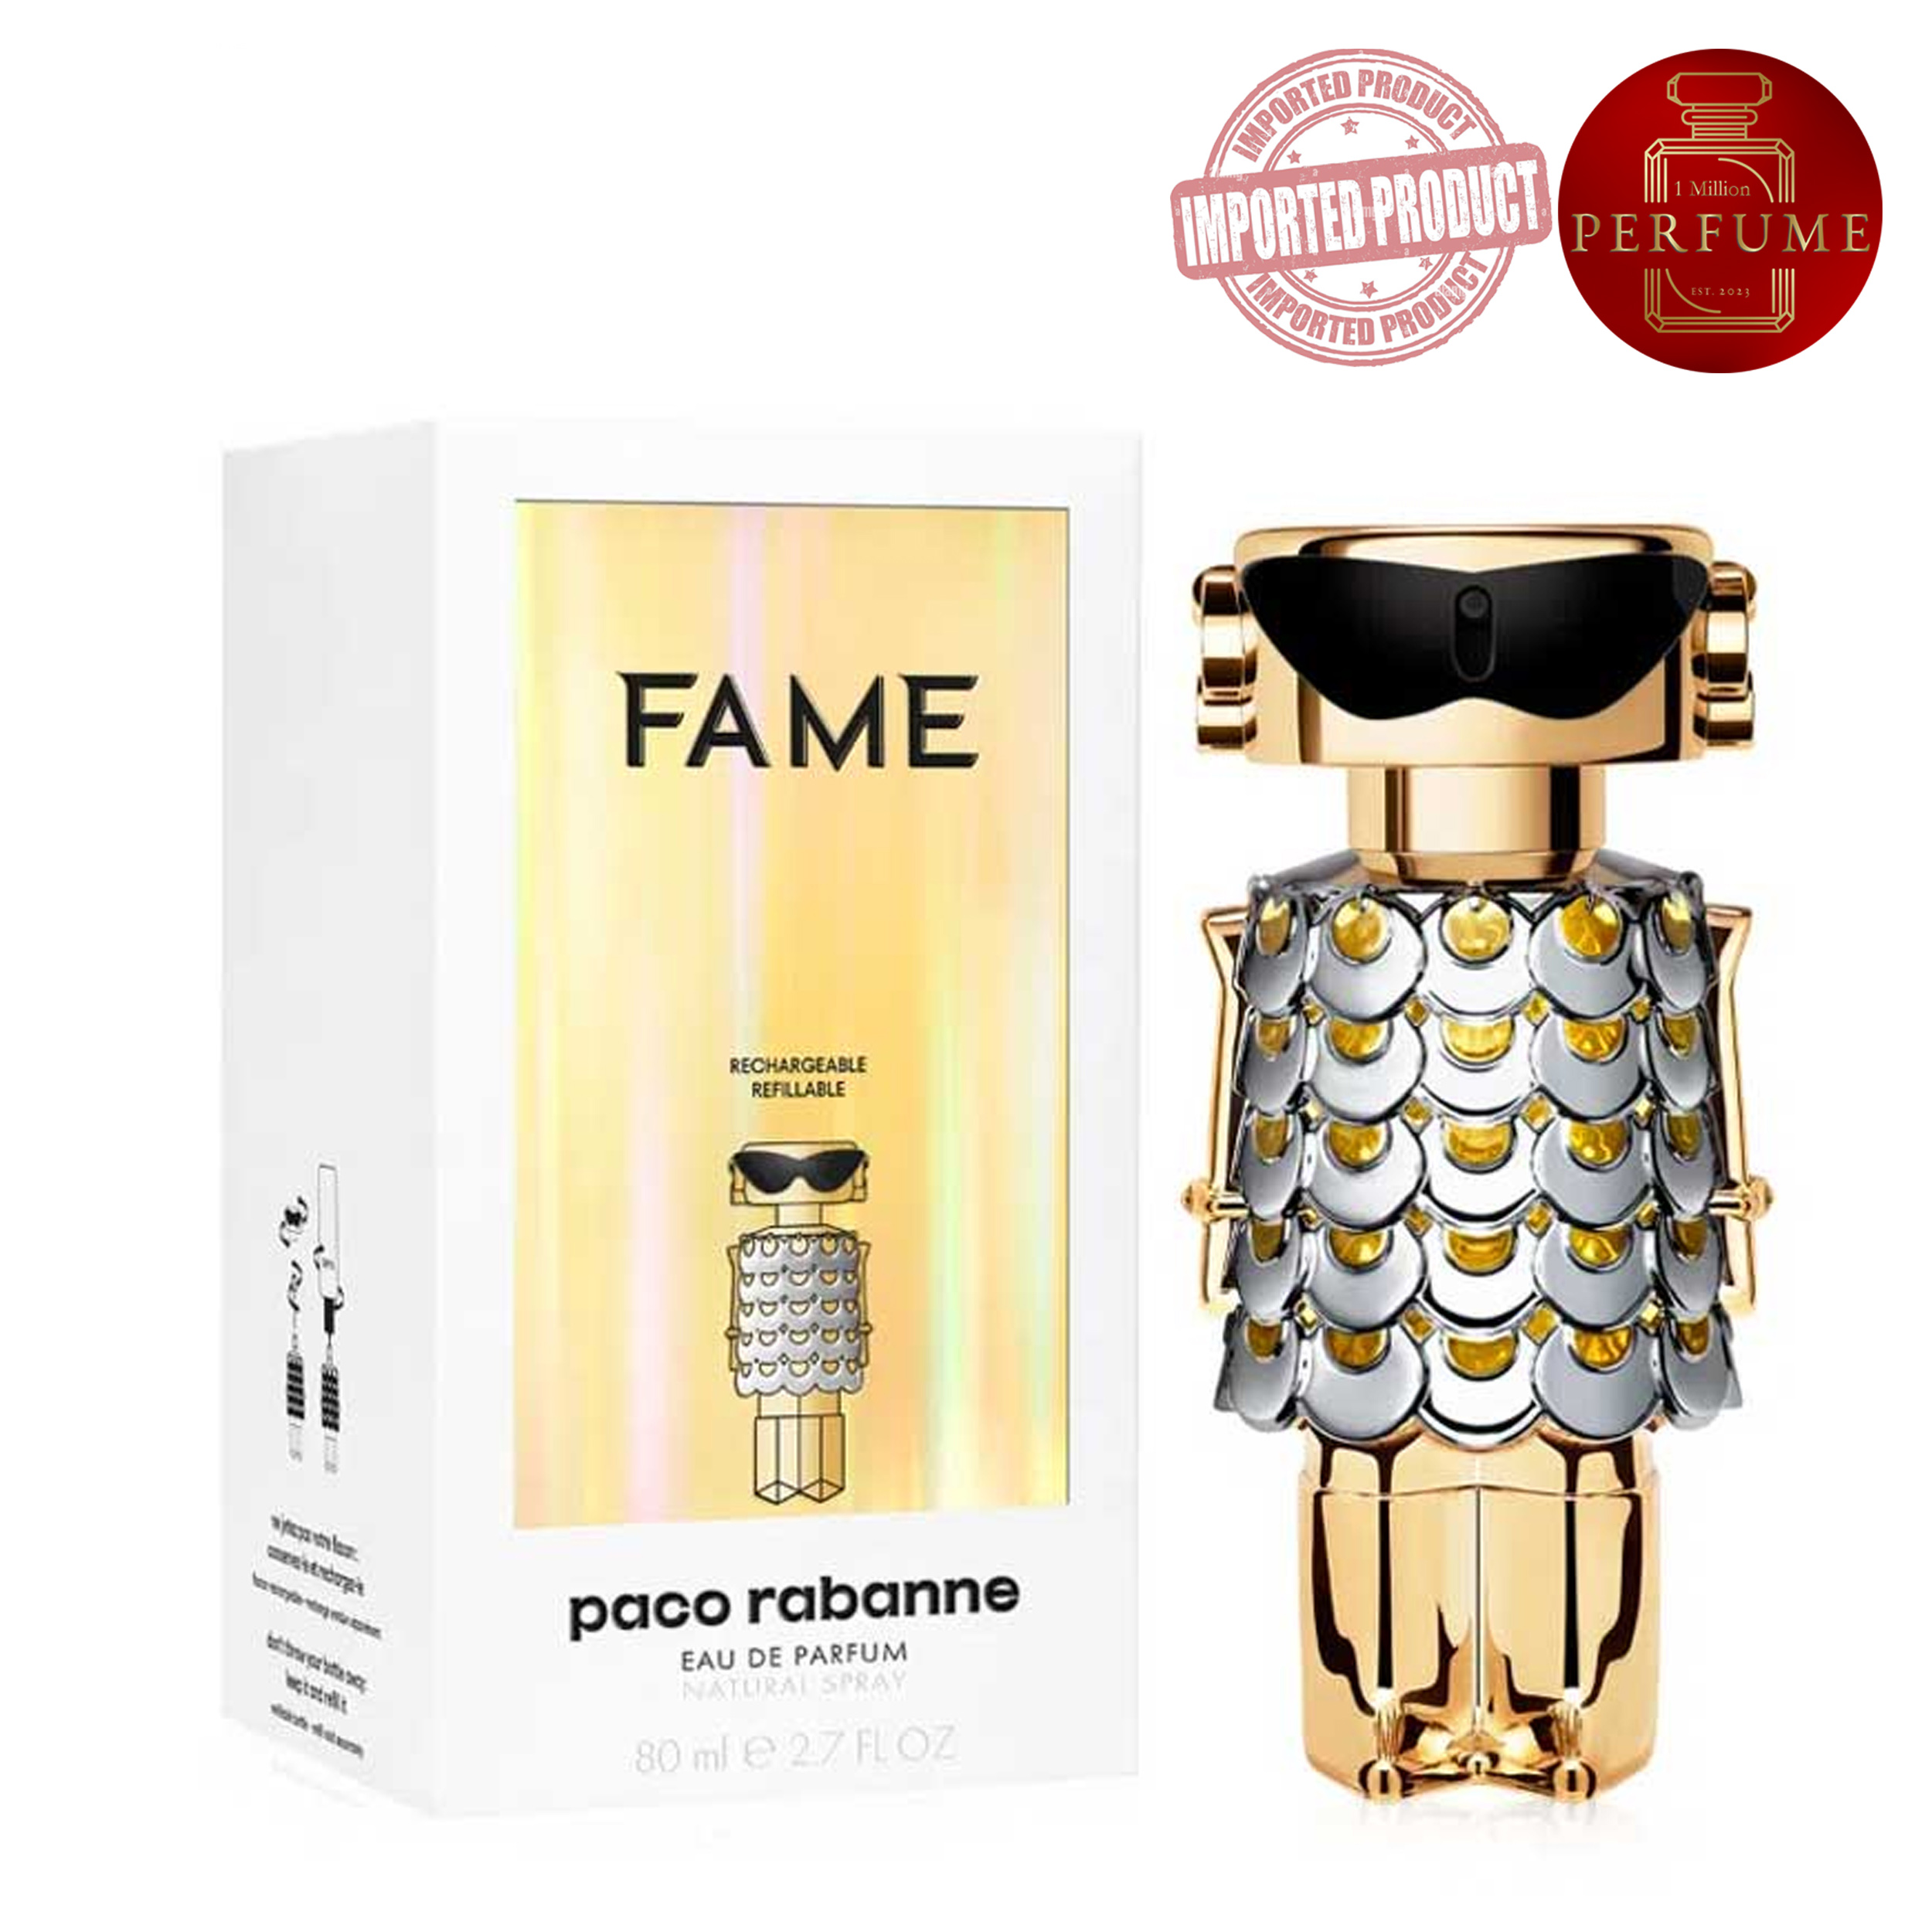 Fame Paco Rabanne (Replica Con Fragancia Importada)- Mujer